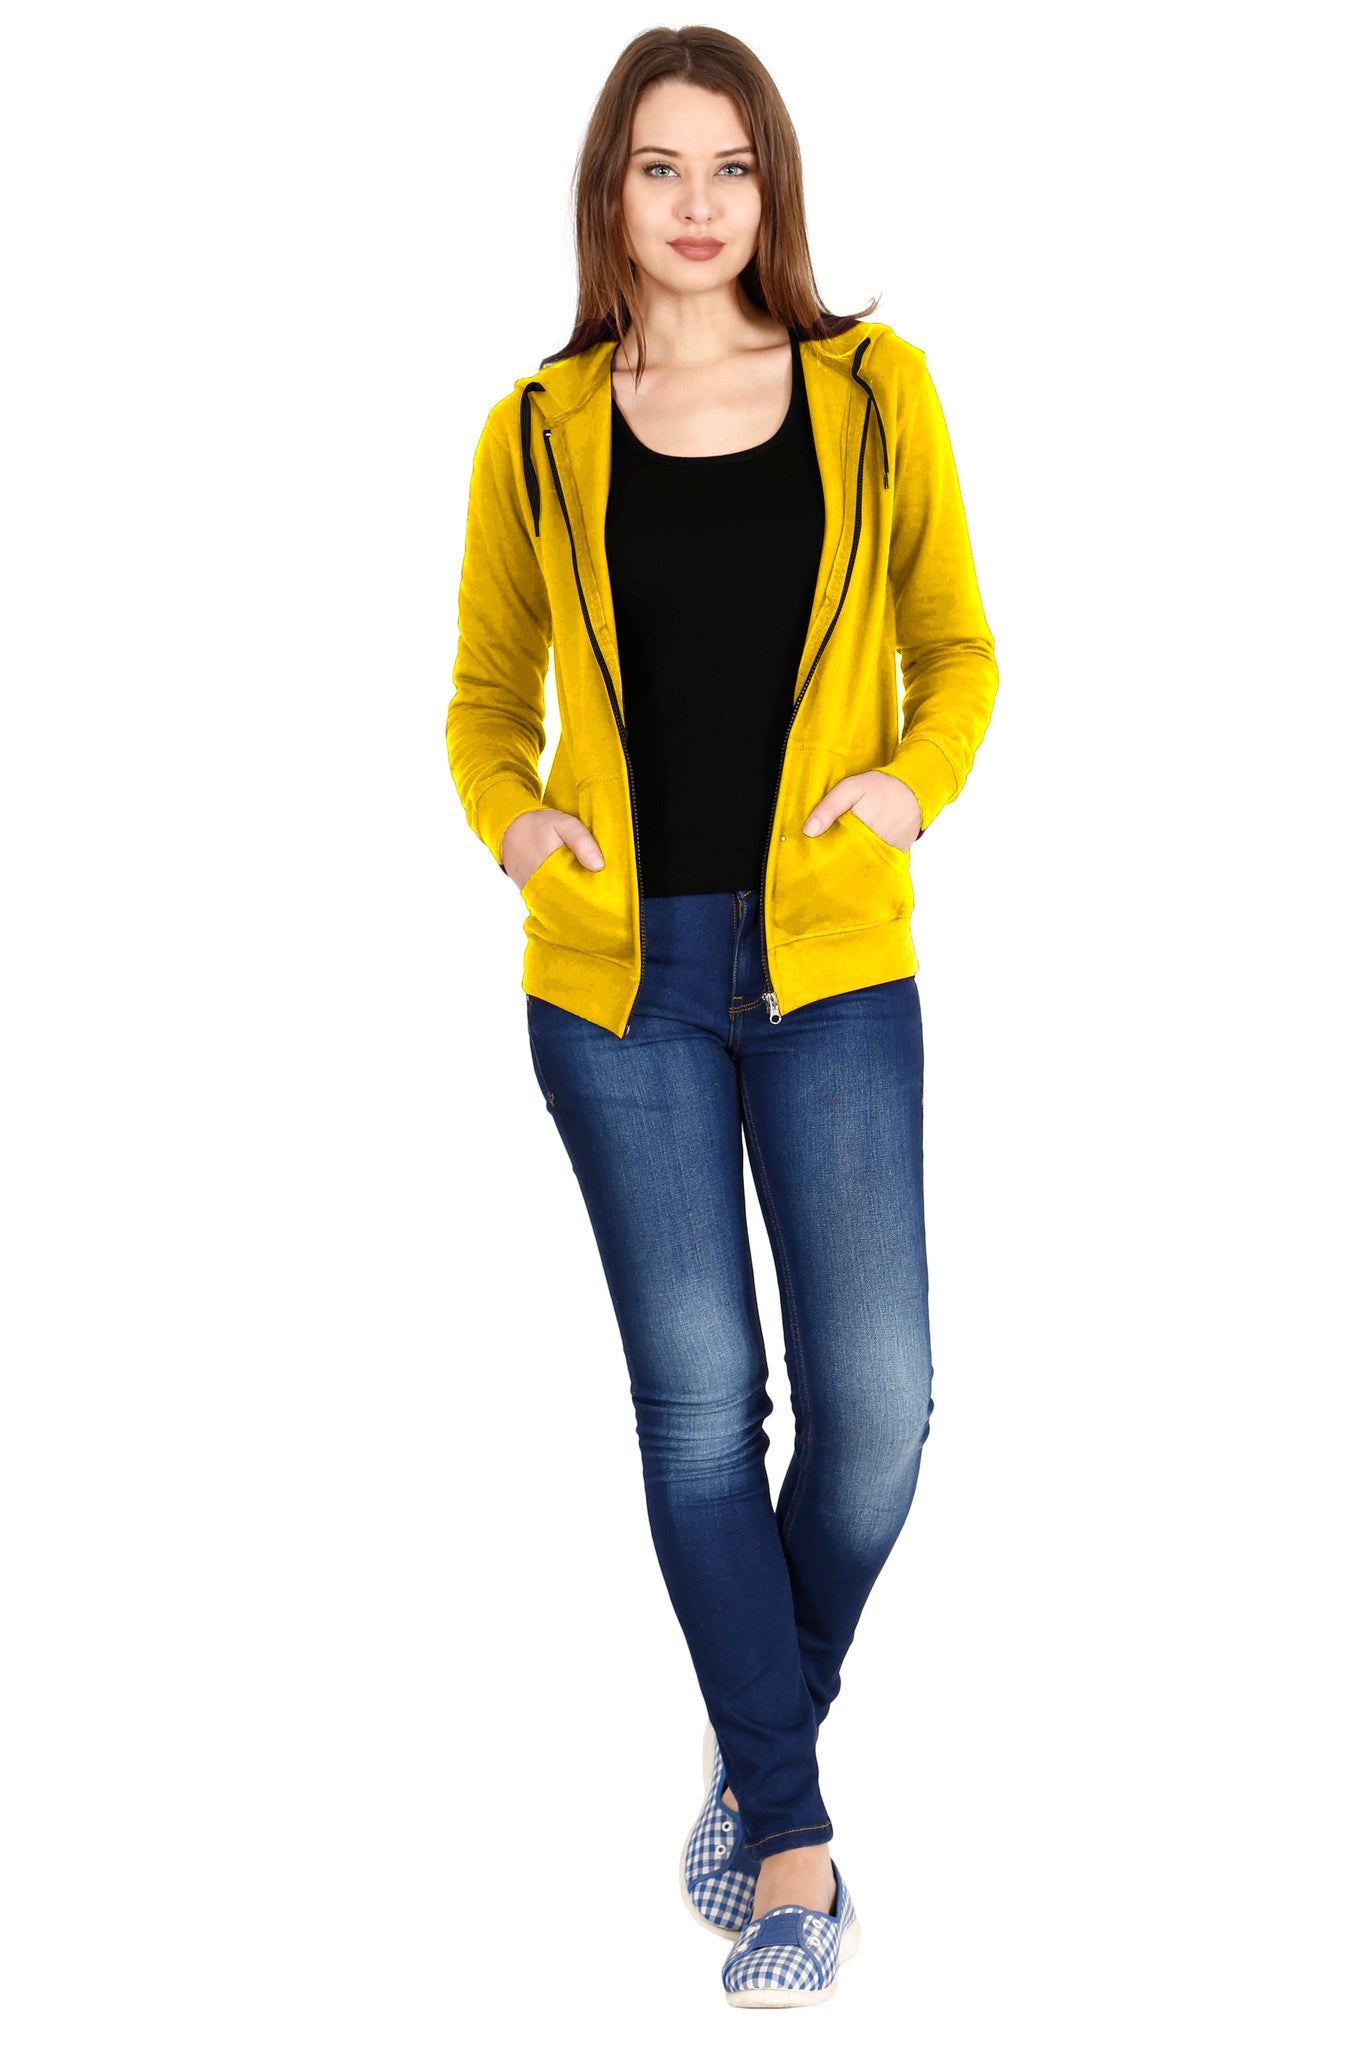 Women's Cotton Plain Full Sleeve Mustard Yellow Color Hoodies/Sweatshirt